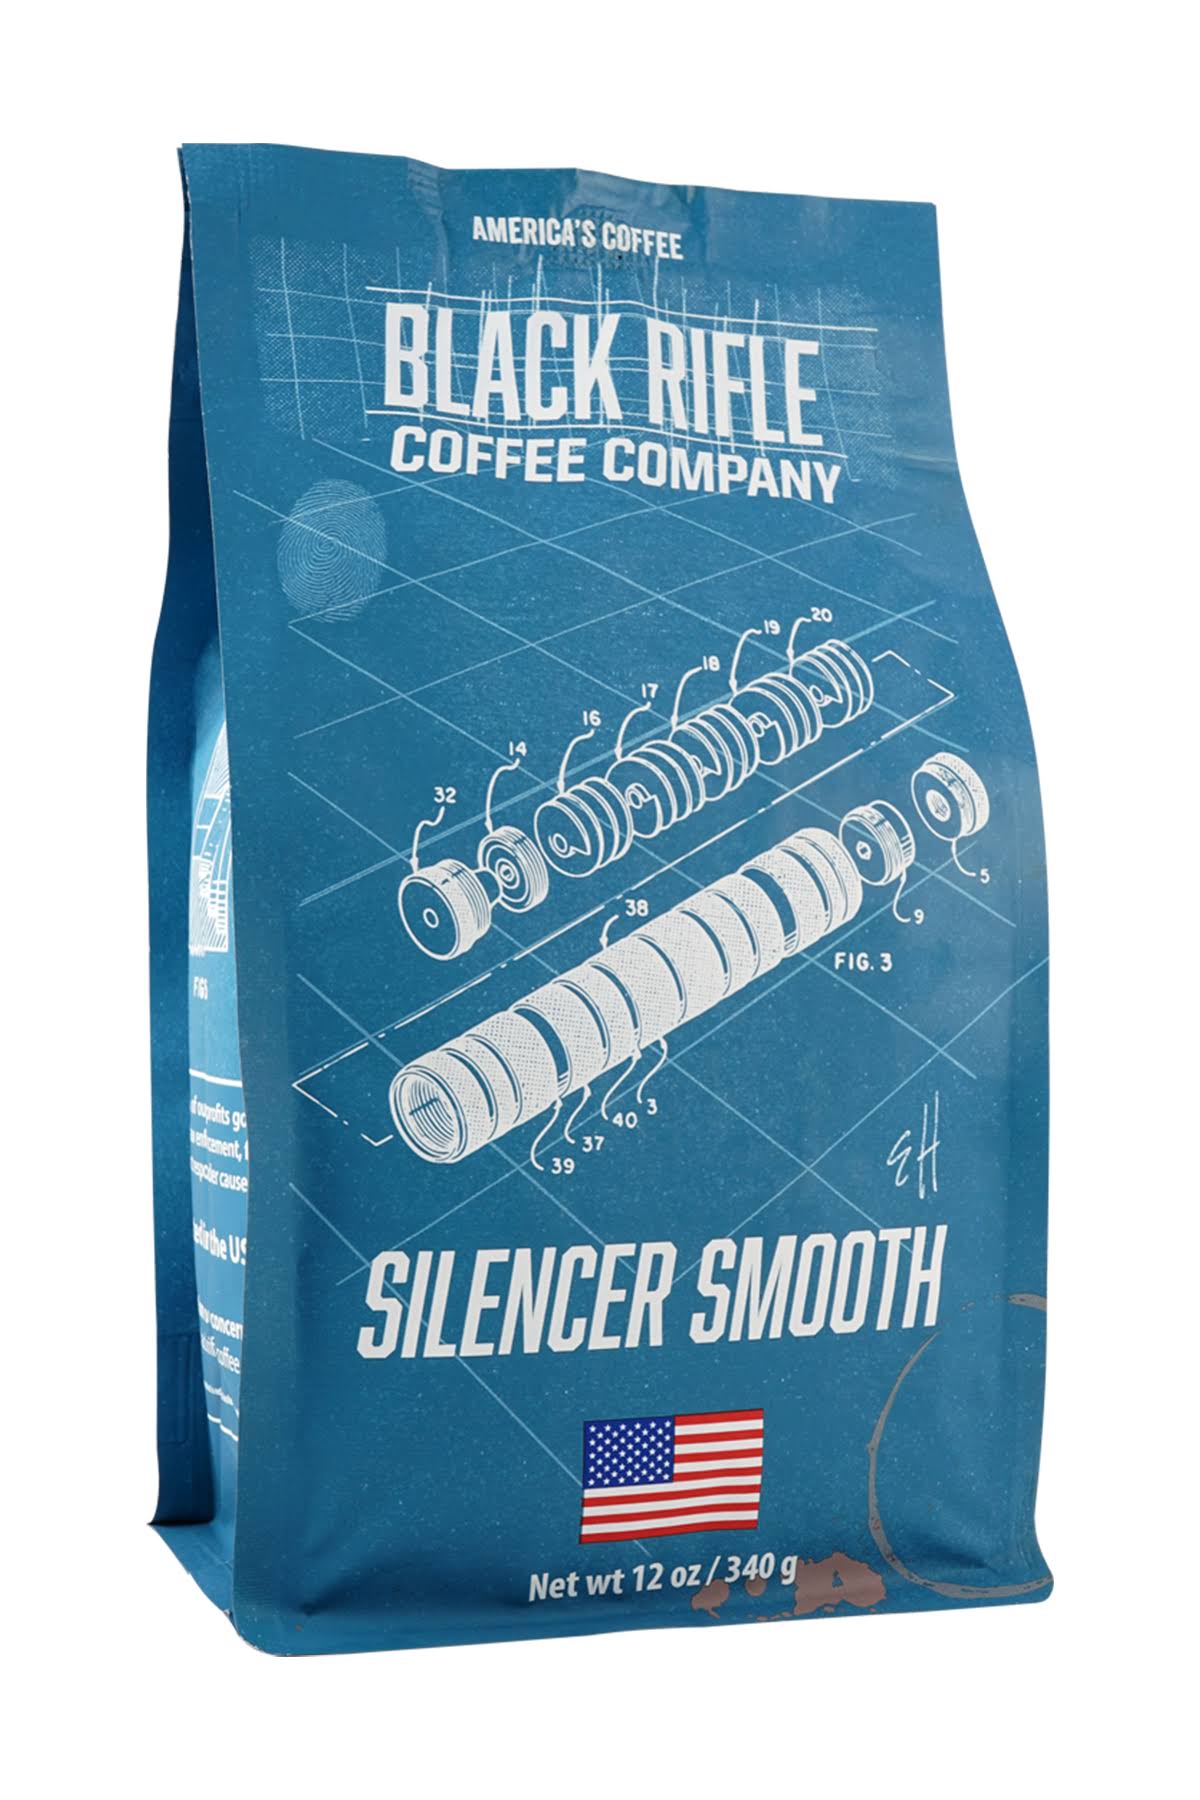 BRCC Coffee Club - Whole Bean SILENCER Smooth / 1 Bag | Black Rifle Coffee Company